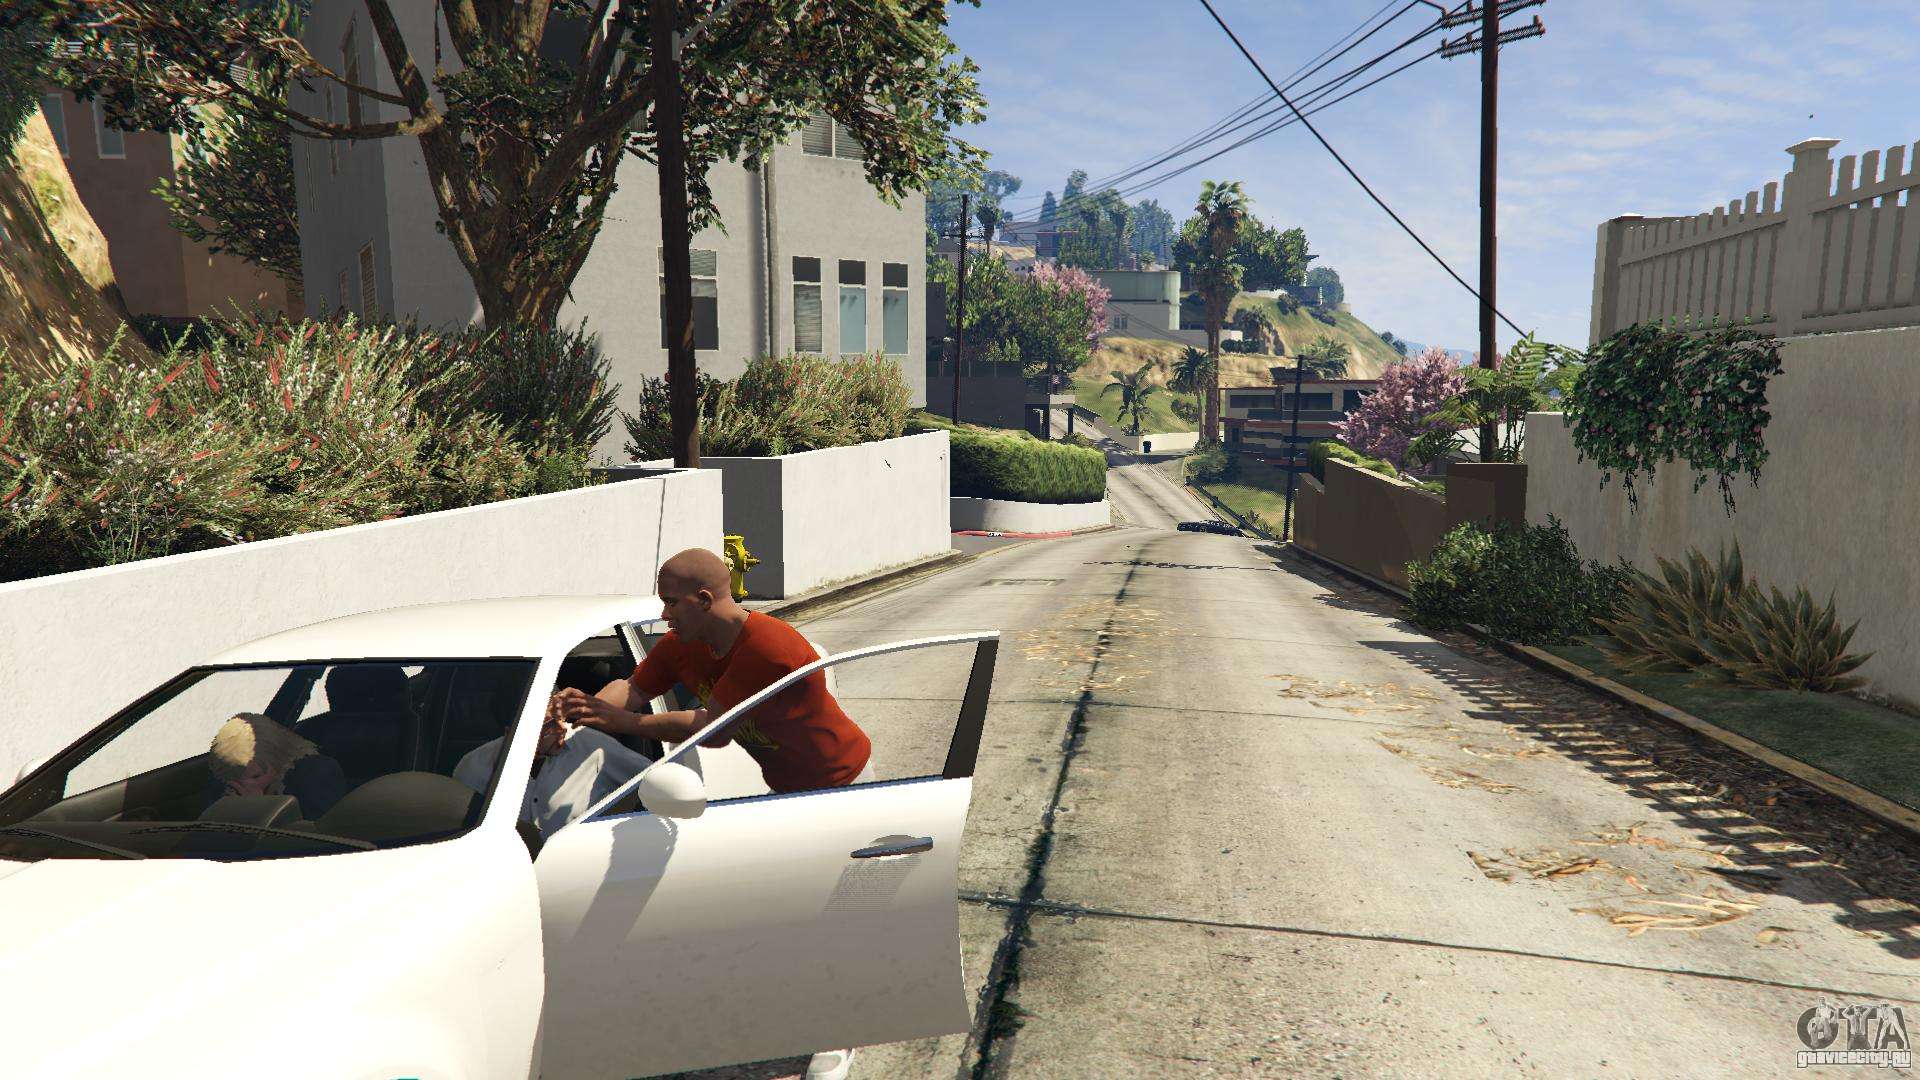 GTA San Andreas - Grand Theft Auto Android